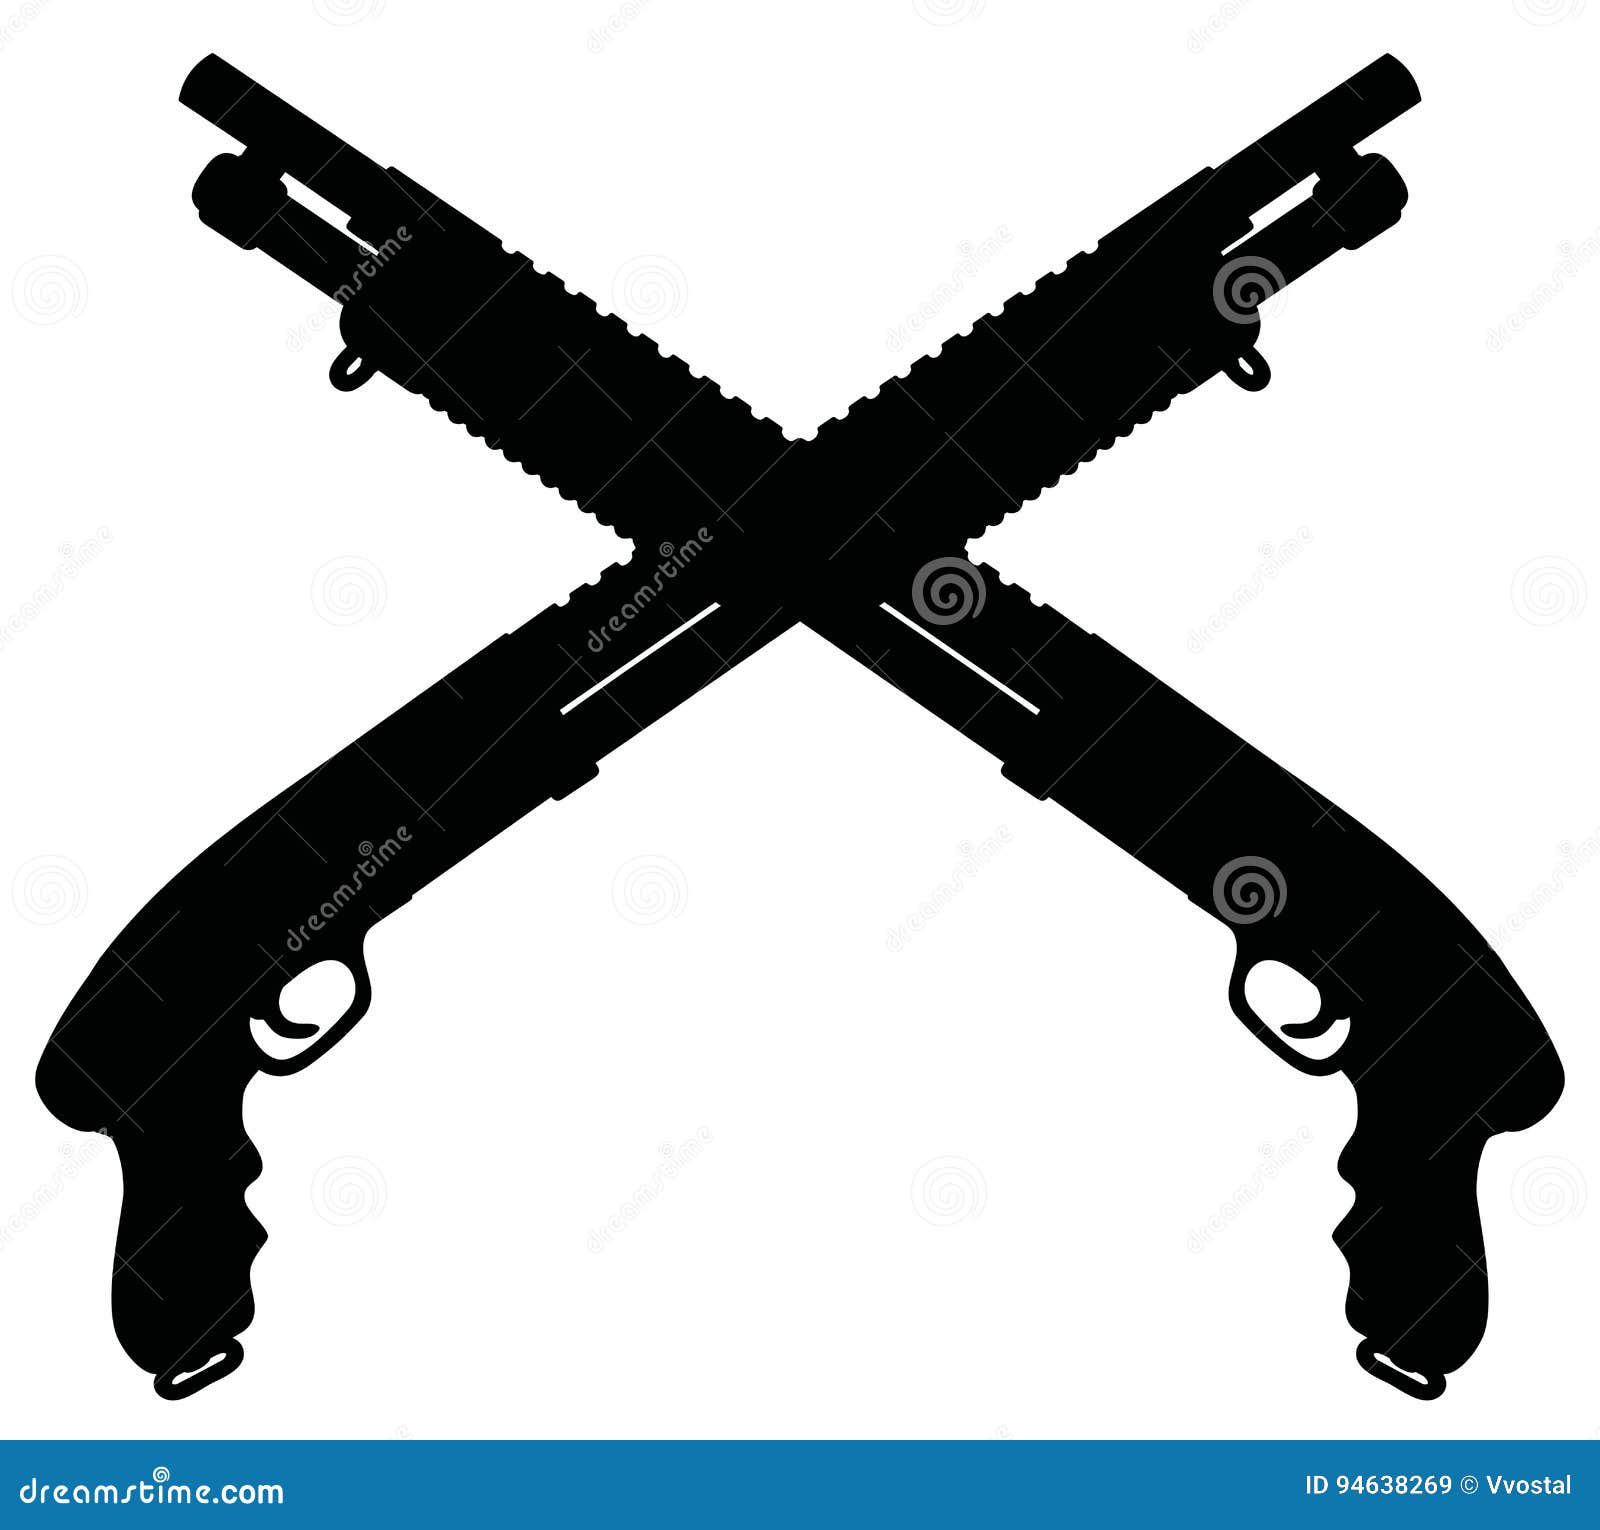 Two short pump shotguns stock vector. Illustration of military - 94638269